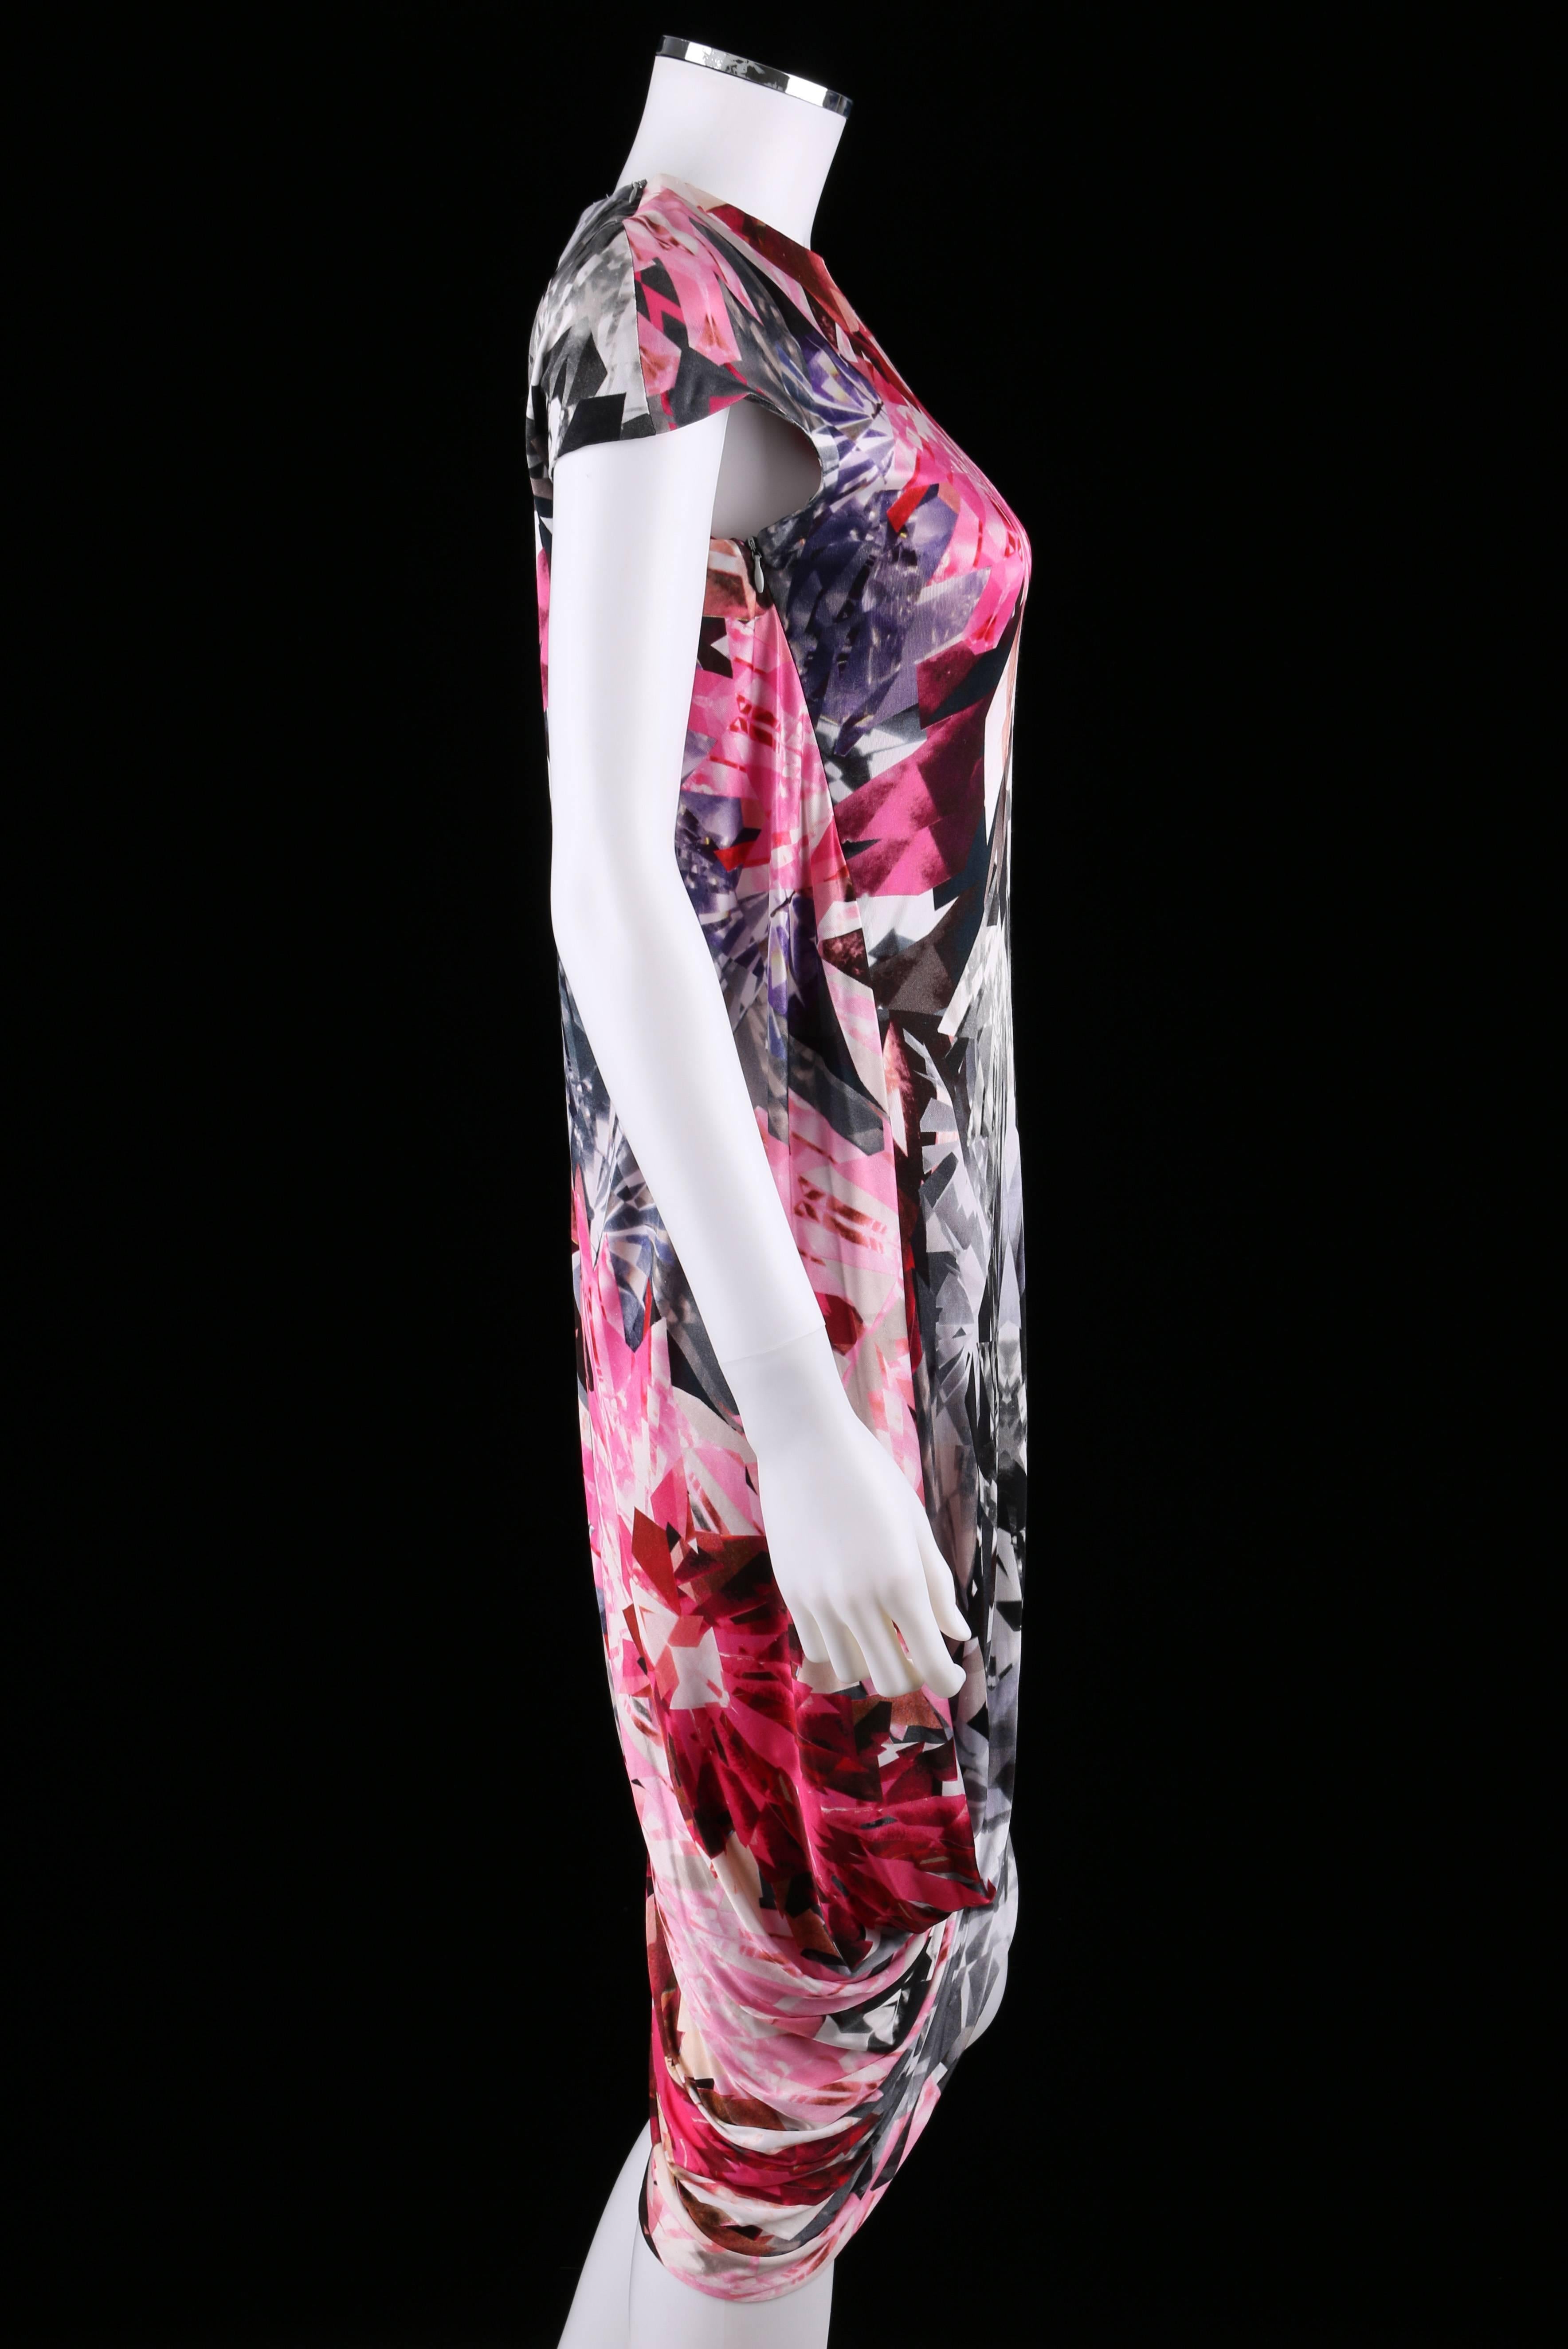 Gray ALEXANDER McQUEEN  S/S 2009 Iconic Crystal Kaleidoscope Print Dress Size 42